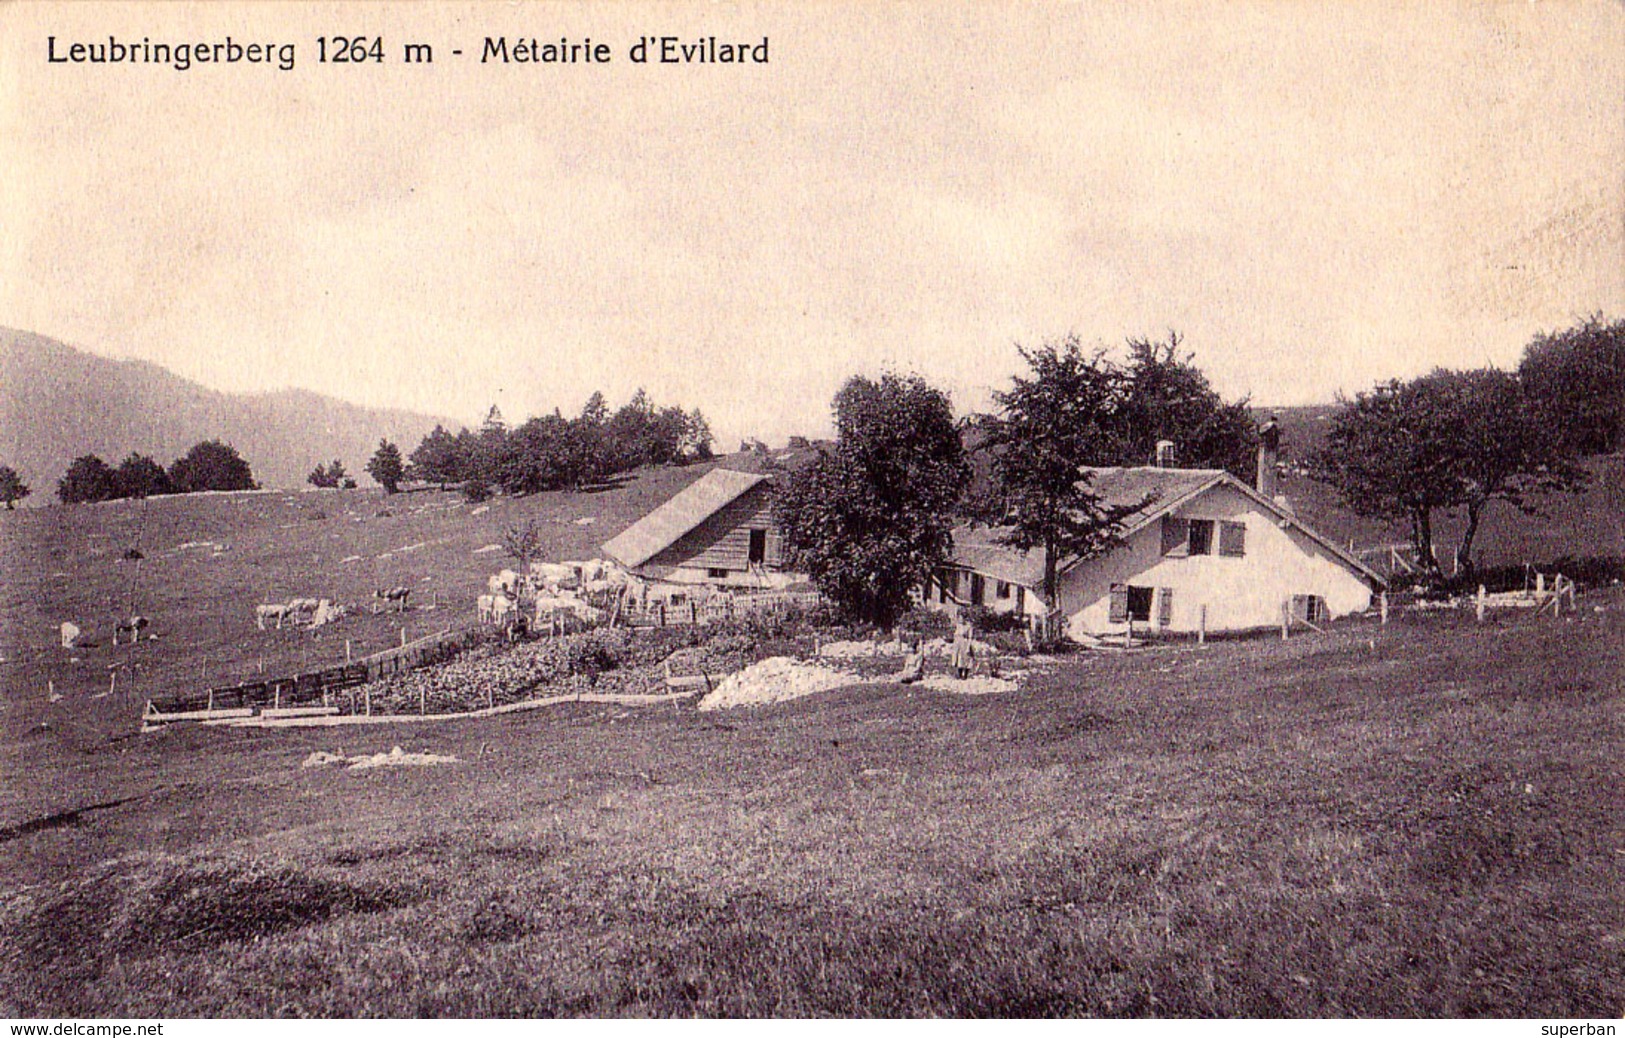 EVILARD / LEUBRINGEN : LEUBRINGERBERG 1264 M - MÉTAIRIE D'EVILARD - ANNÉE / YEAR ~ 1910 - RRR ! (ae057) - Evilard